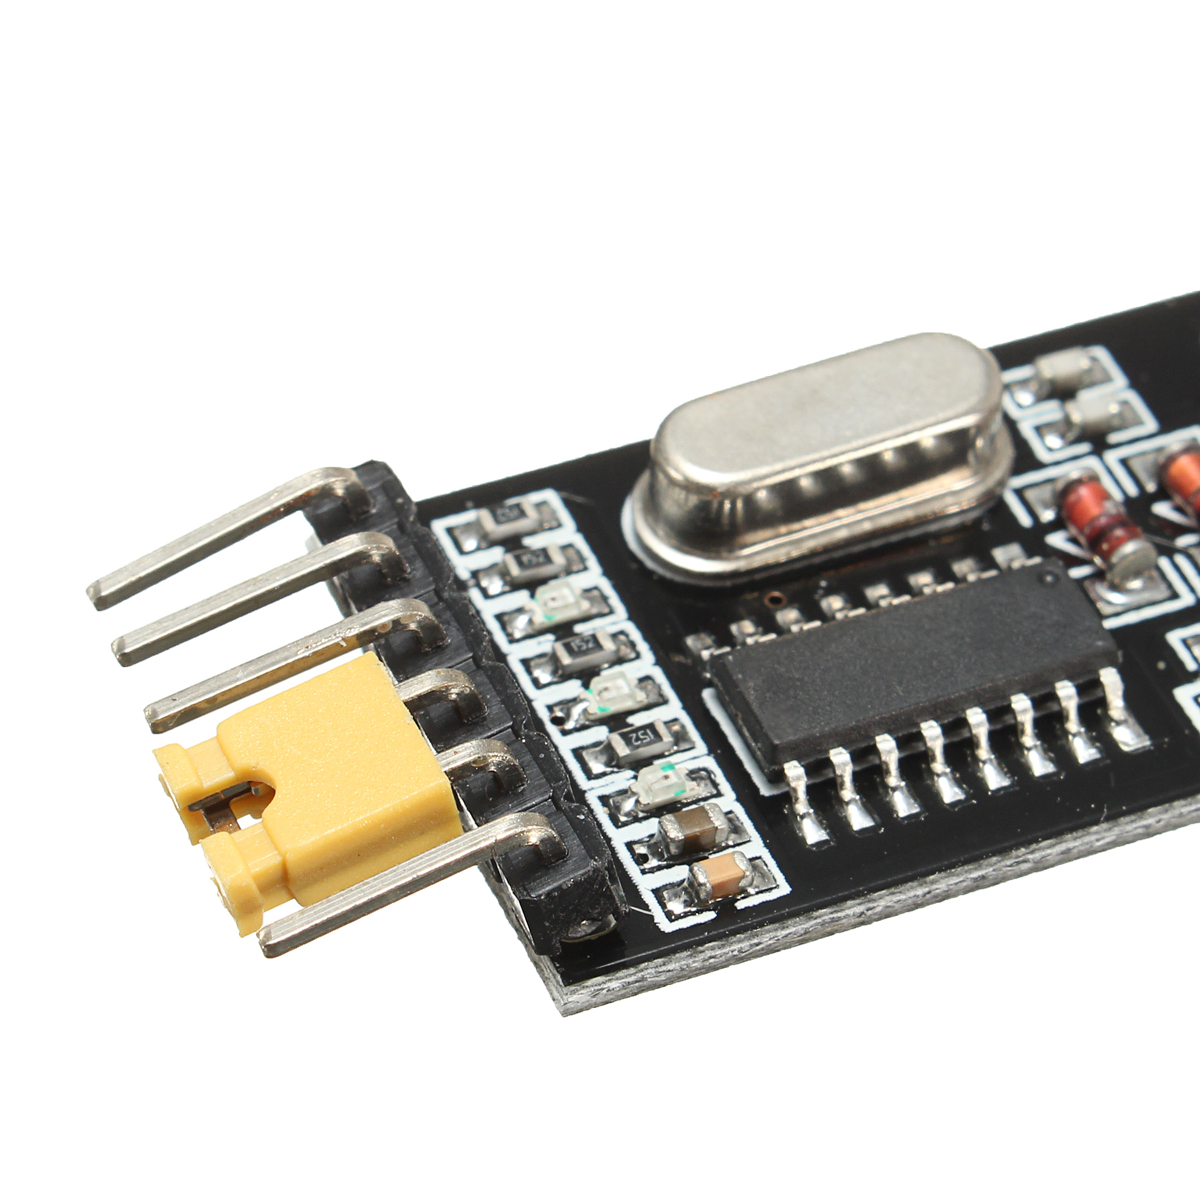 20pcs-33V-5V-USB-to-TTL-Converter-CH340G-UART-Serial-Adapter-Module-STC-1314968-6